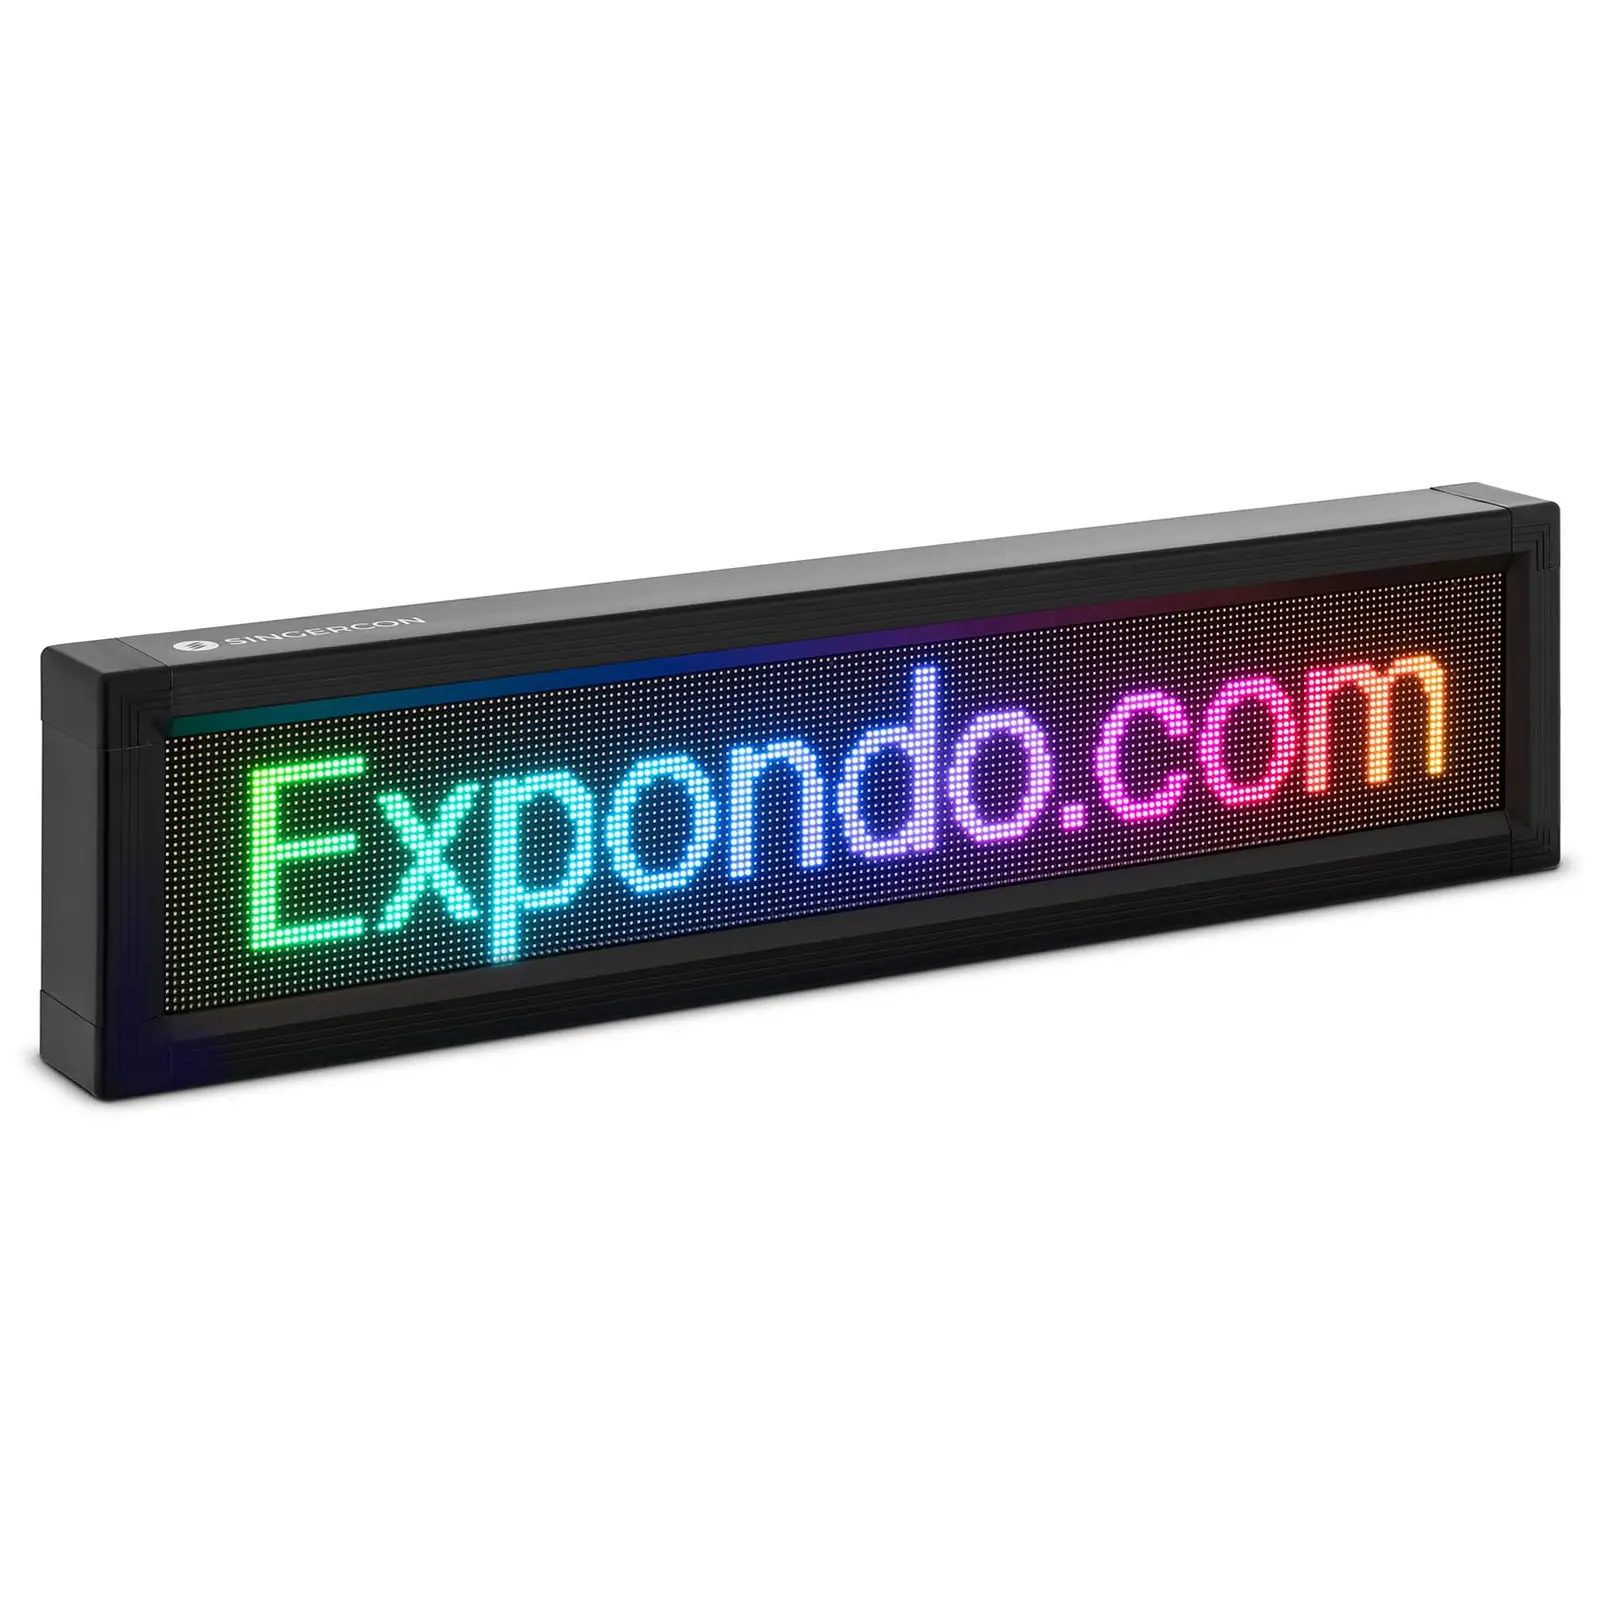 Scritta LED - 192 x 32 LED colorati - 67 x 19 cm - Programmabile tramite iOS / Android